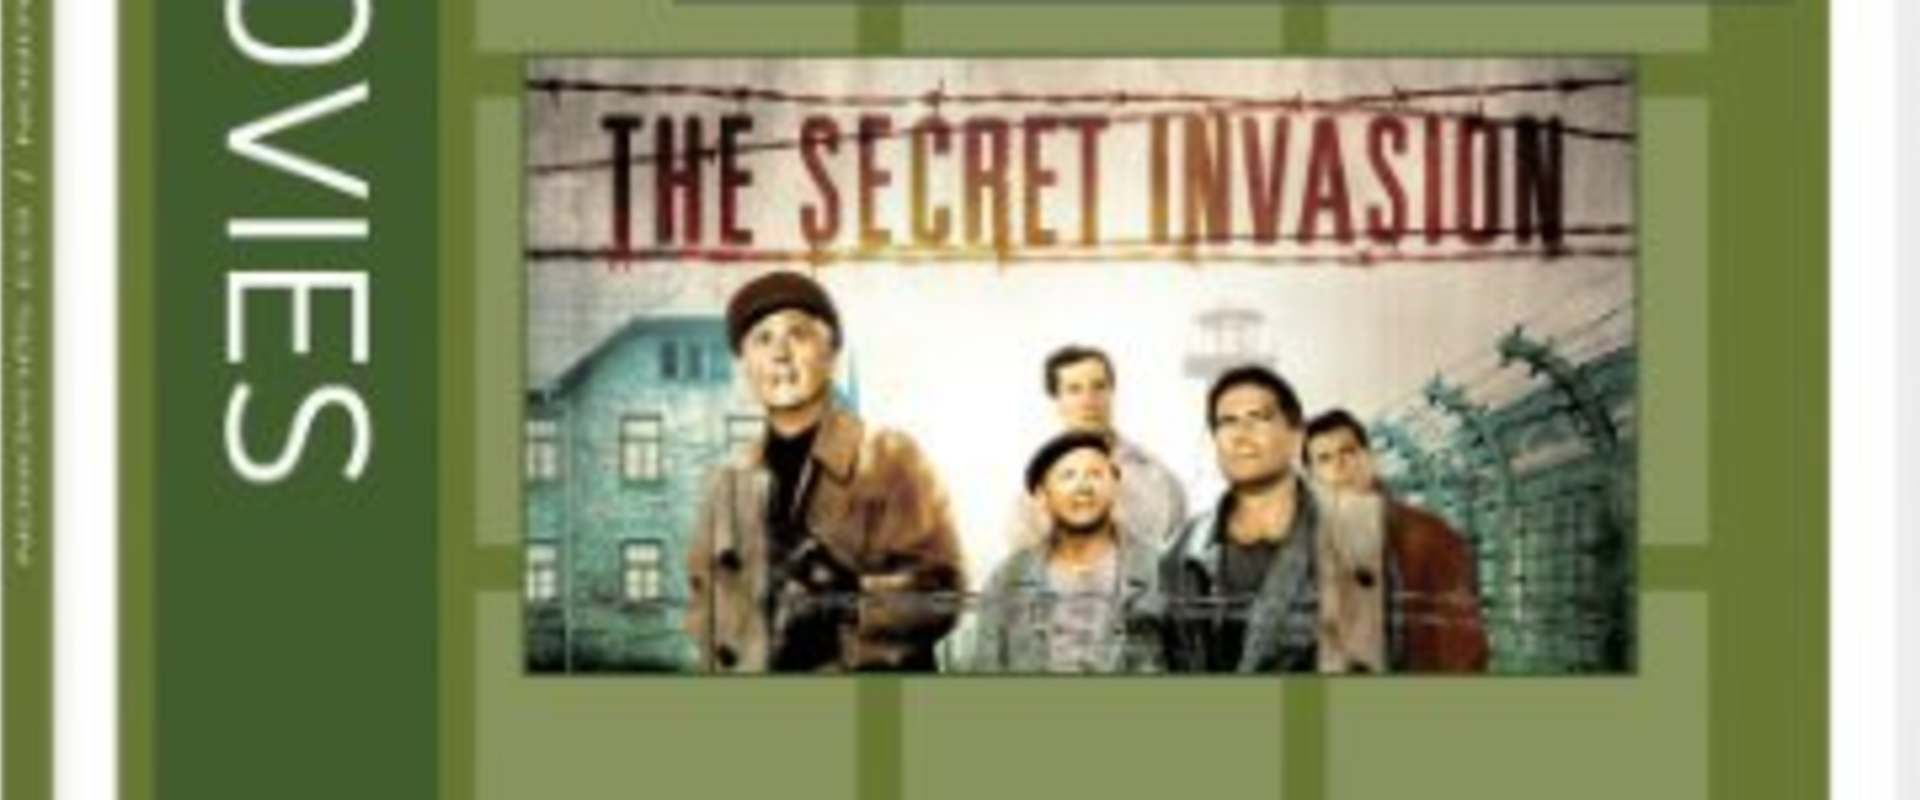 The Secret Invasion background 1